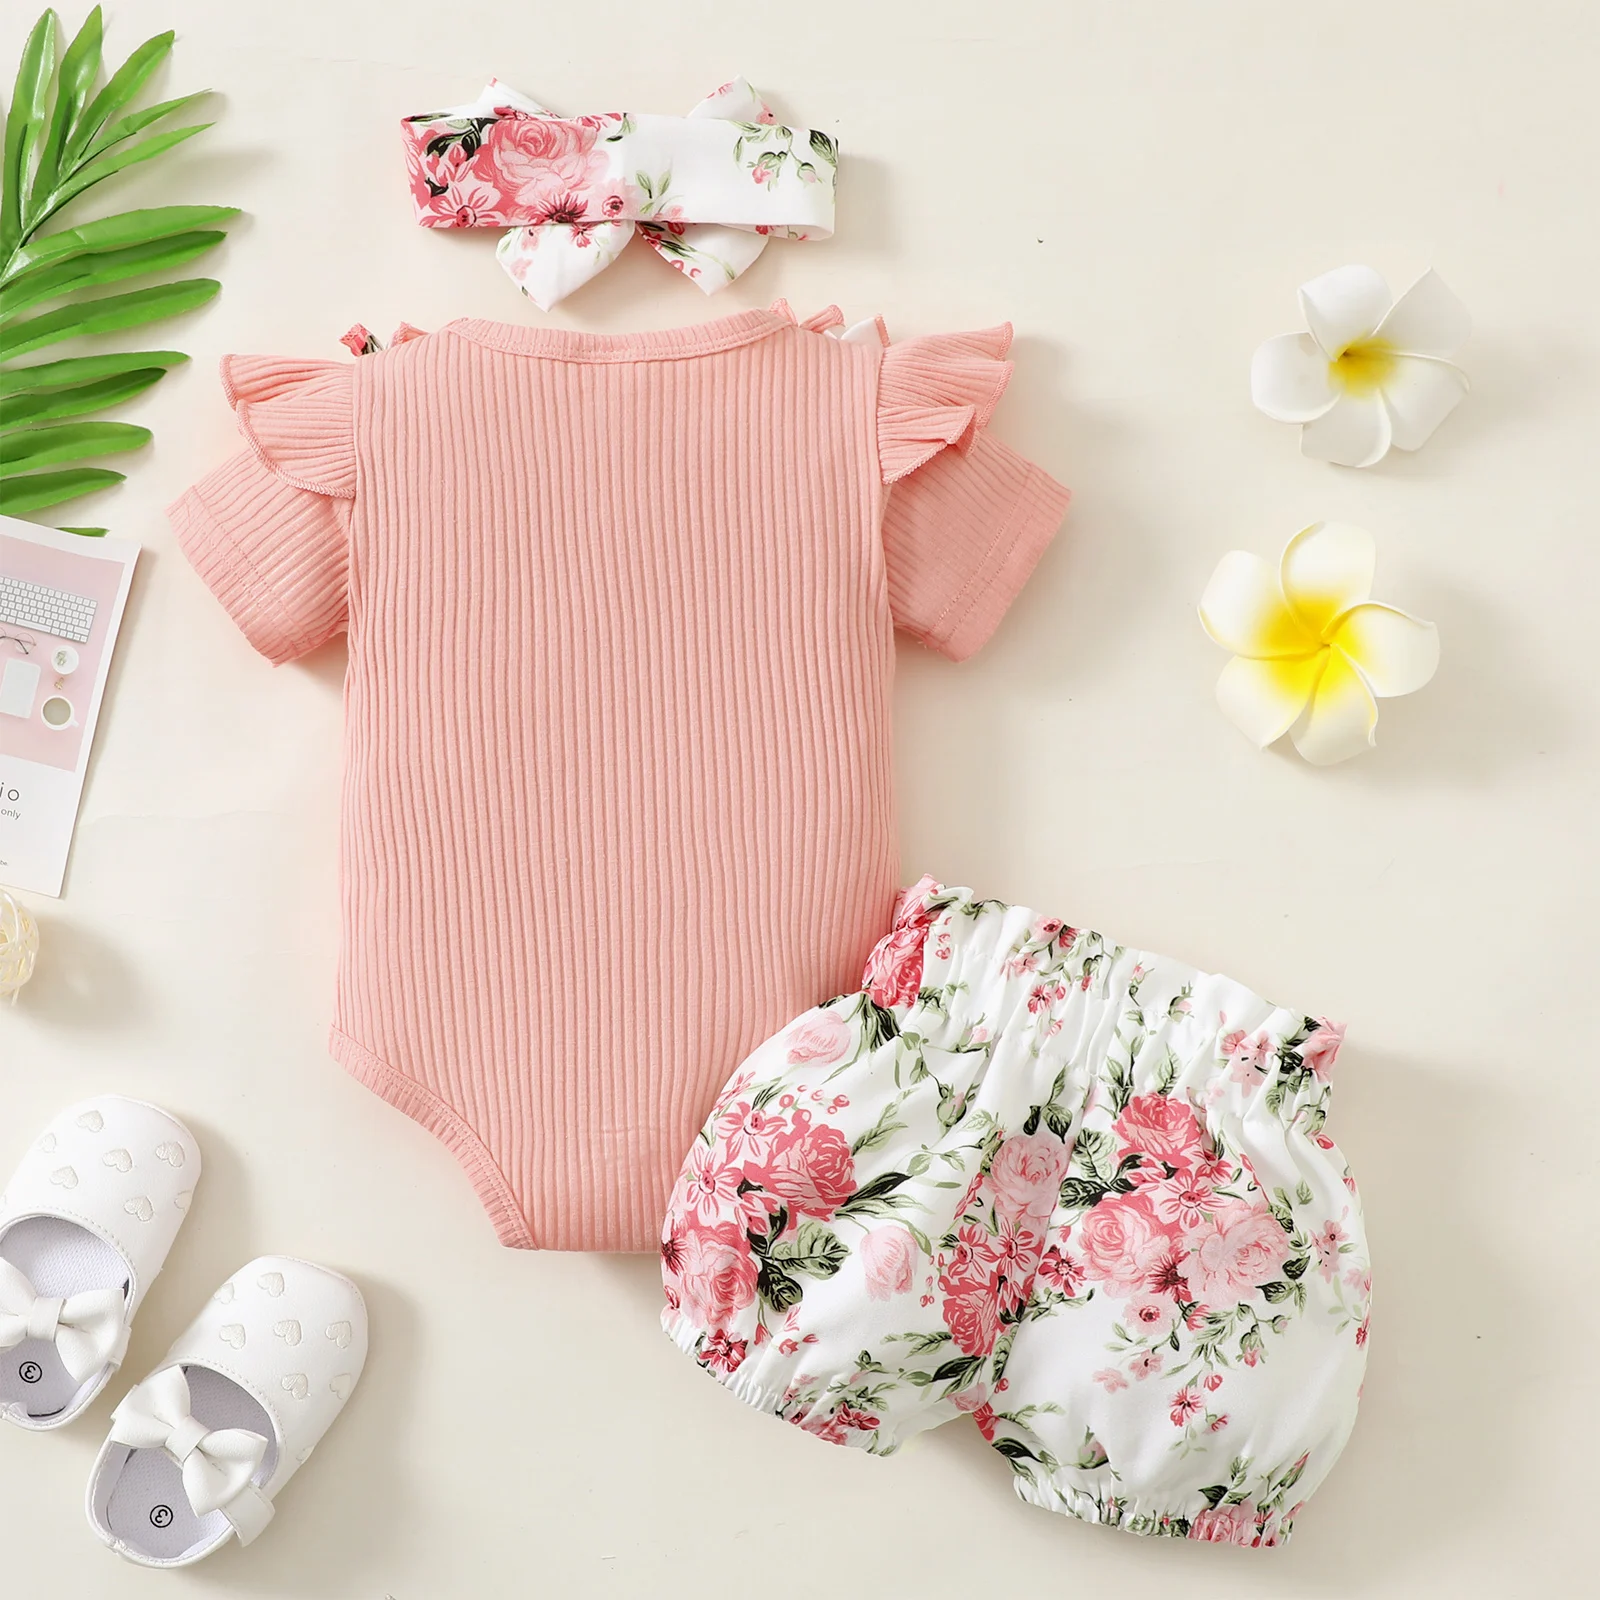 Fashion Summer Newborn Baby Girl Clothes Set Short Sleeve Ruffle Romper Tops Floral Print Shorts Headband Infant 3Pcs Outfits 2